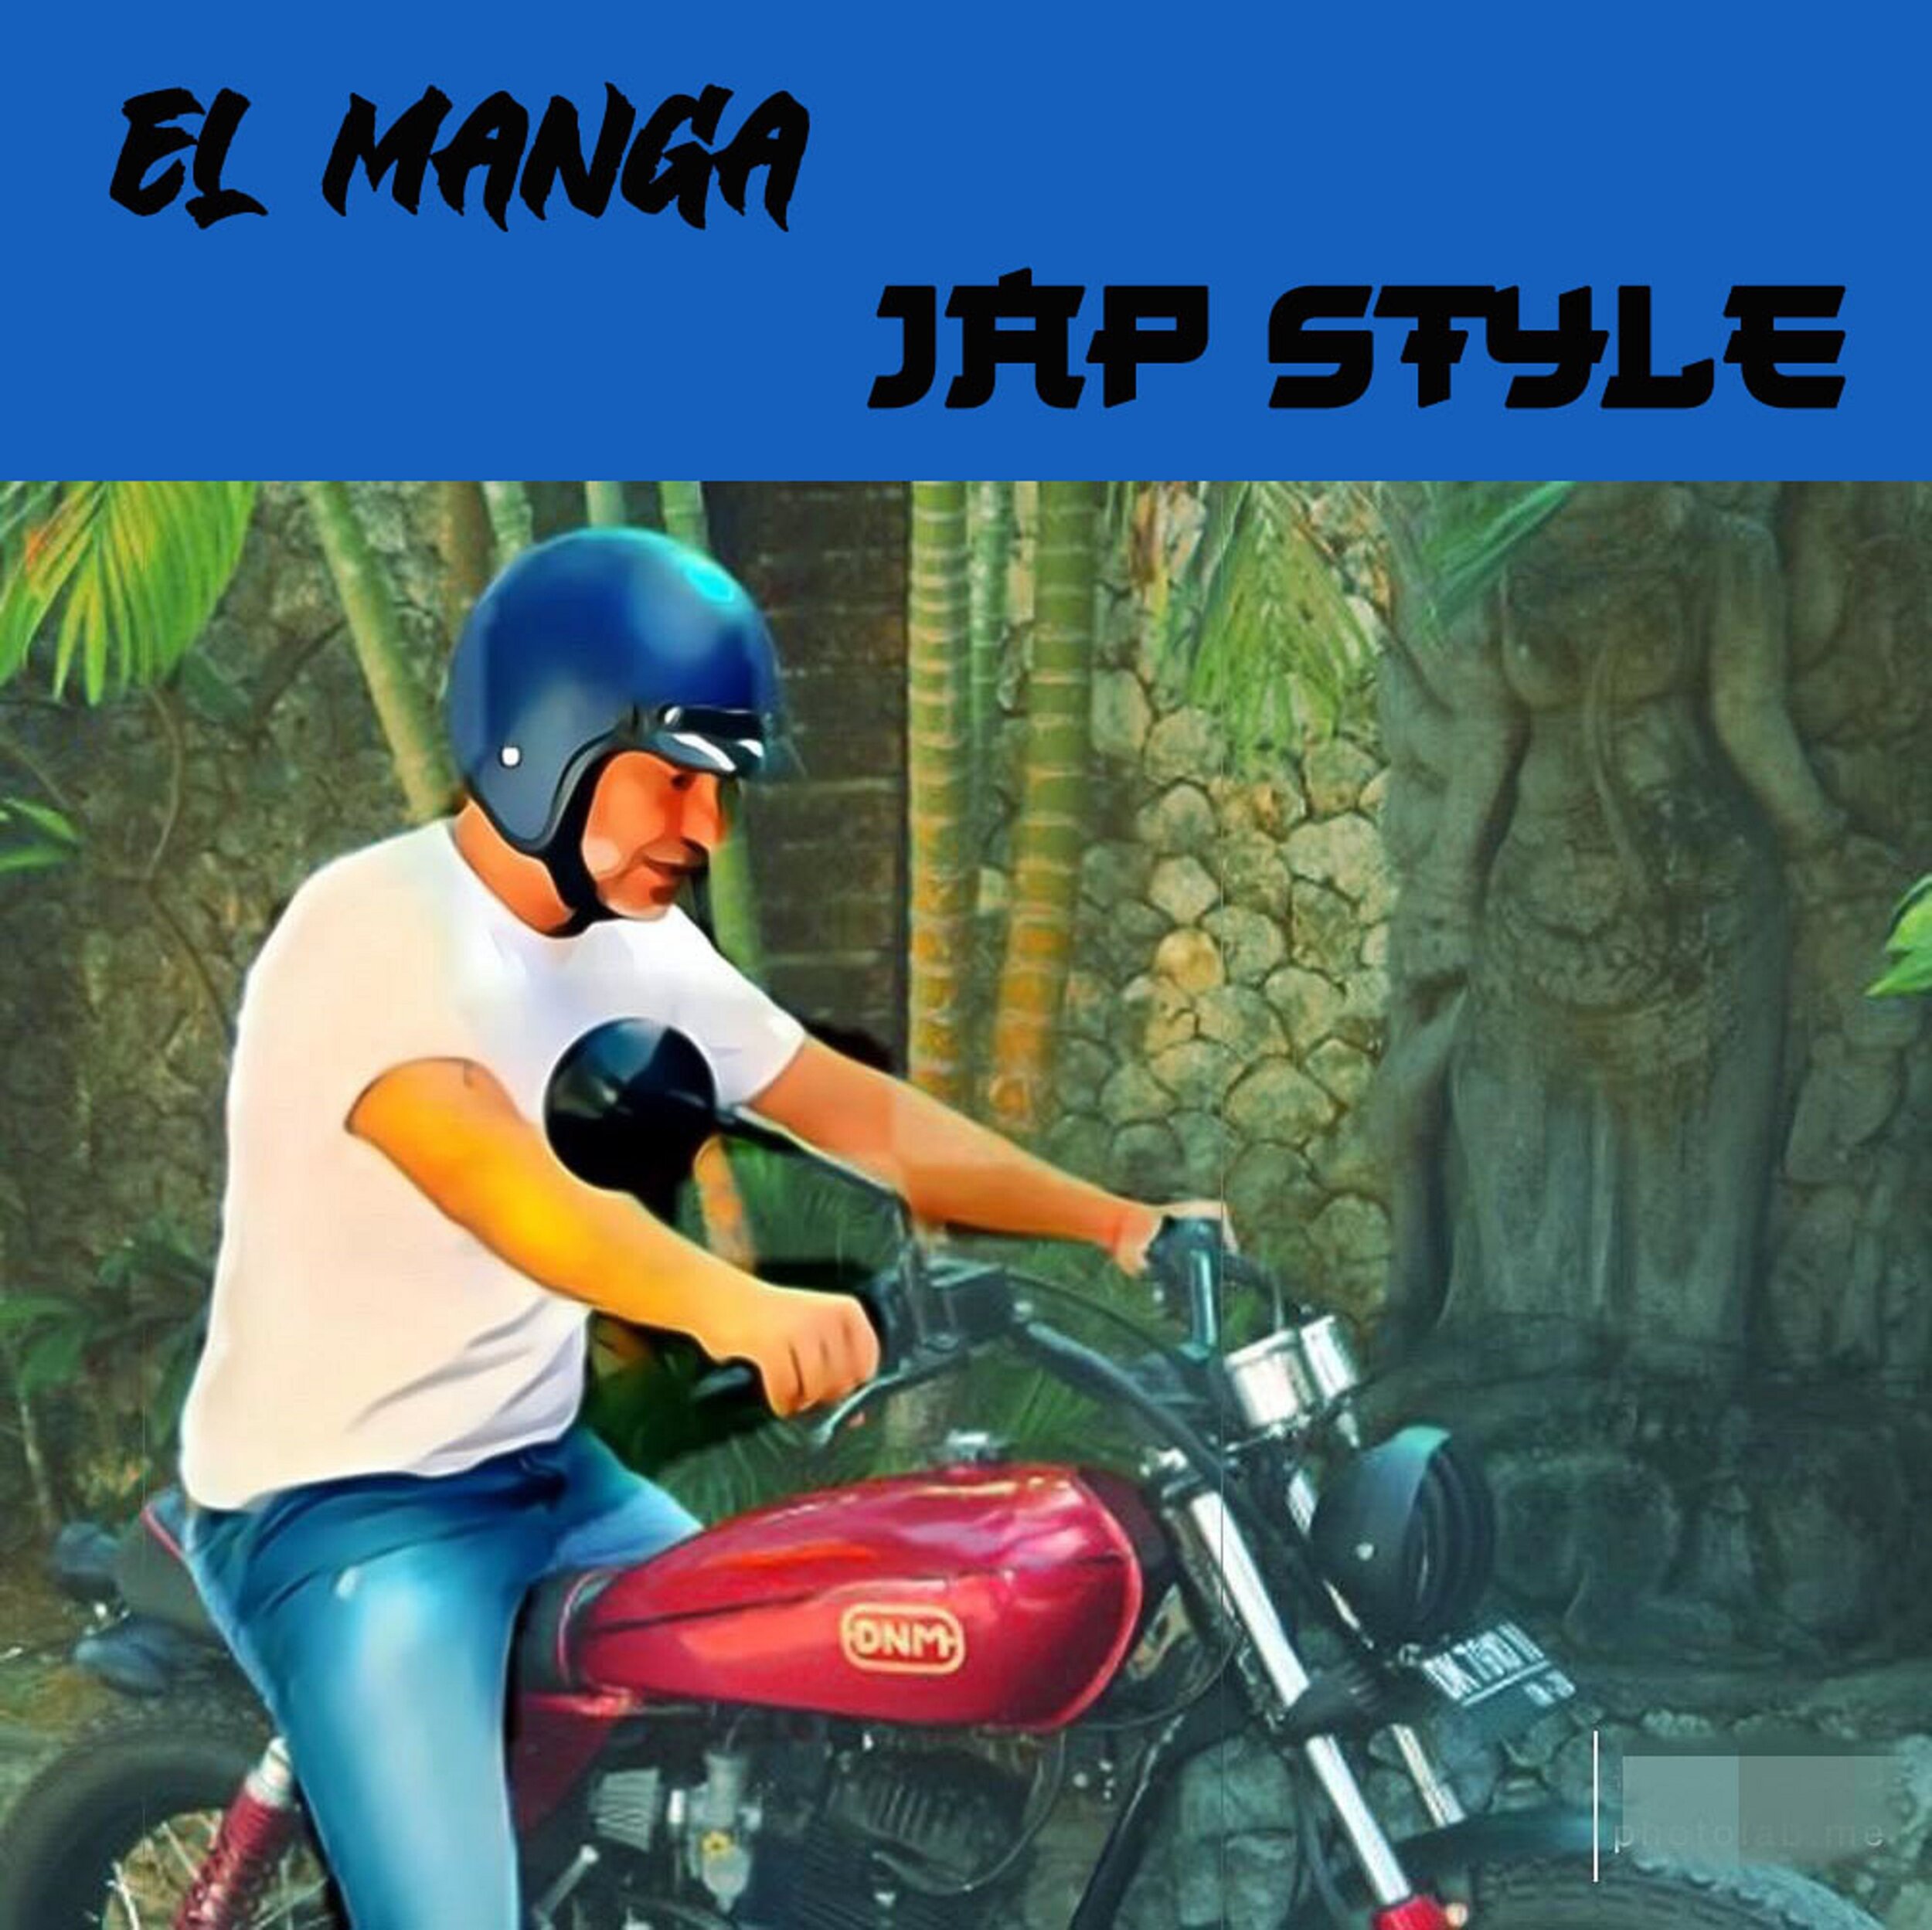 EL MANGA 'JAP STYLE' (1).jpg